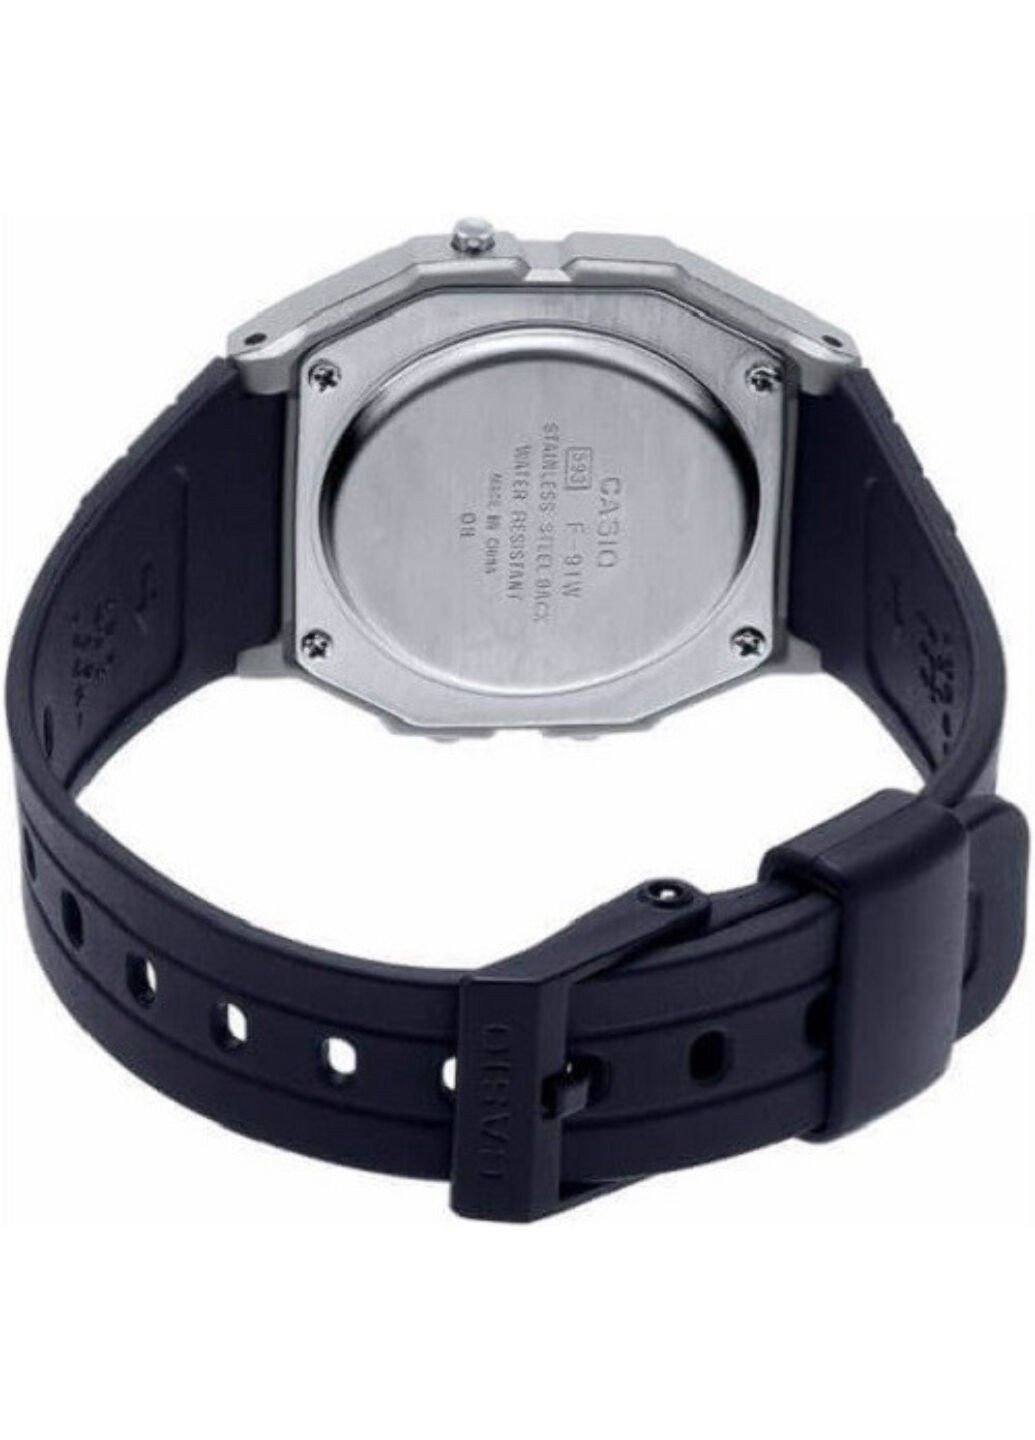 Часы наручные Casio f-91wm-1bef (272127549)